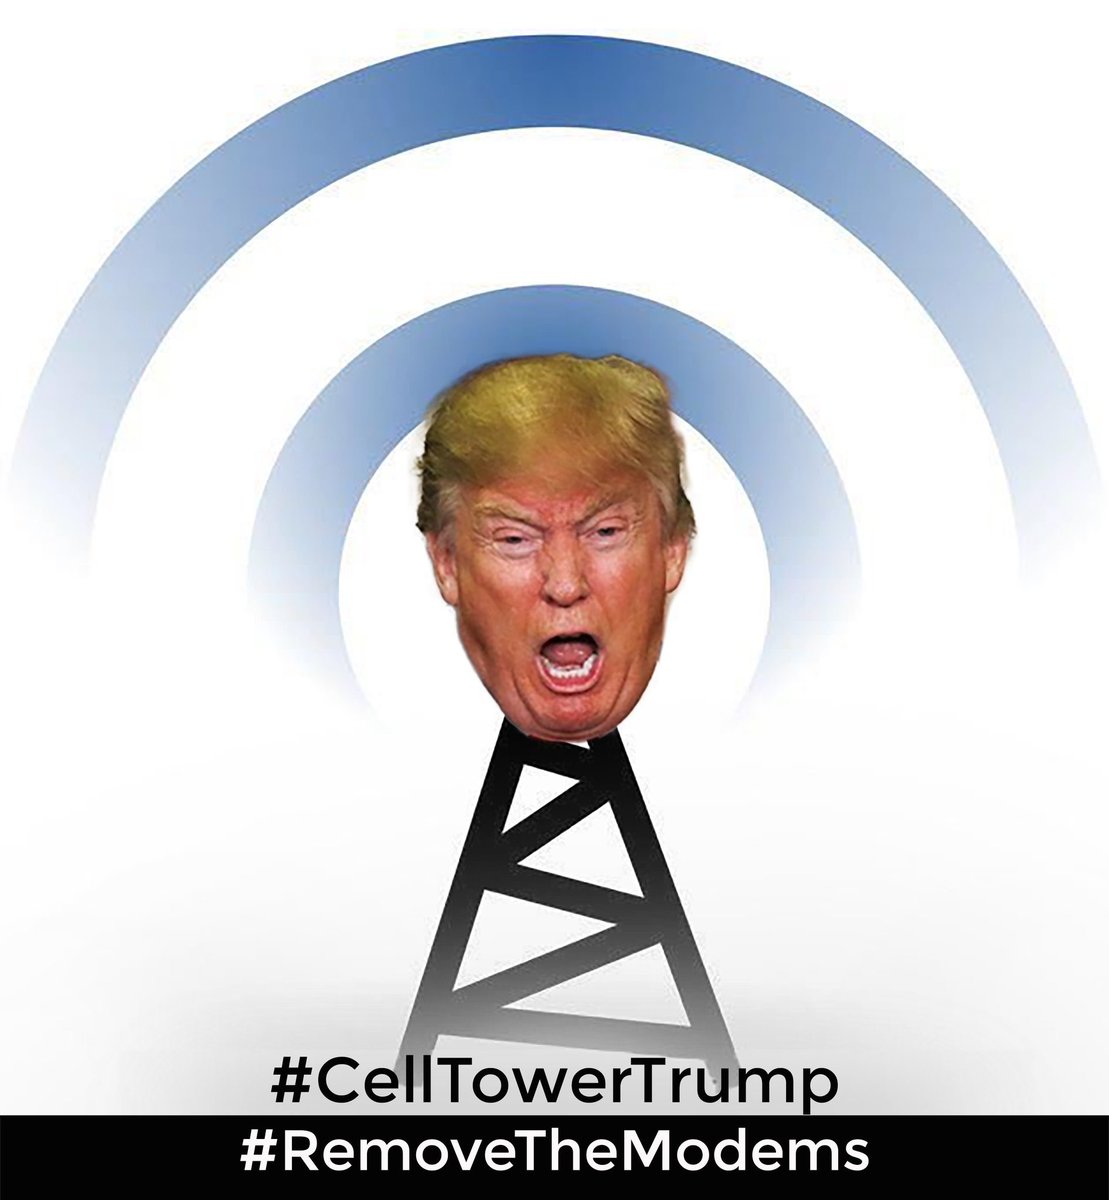  #RemoveTheModems  #CellTowerTrump 5/